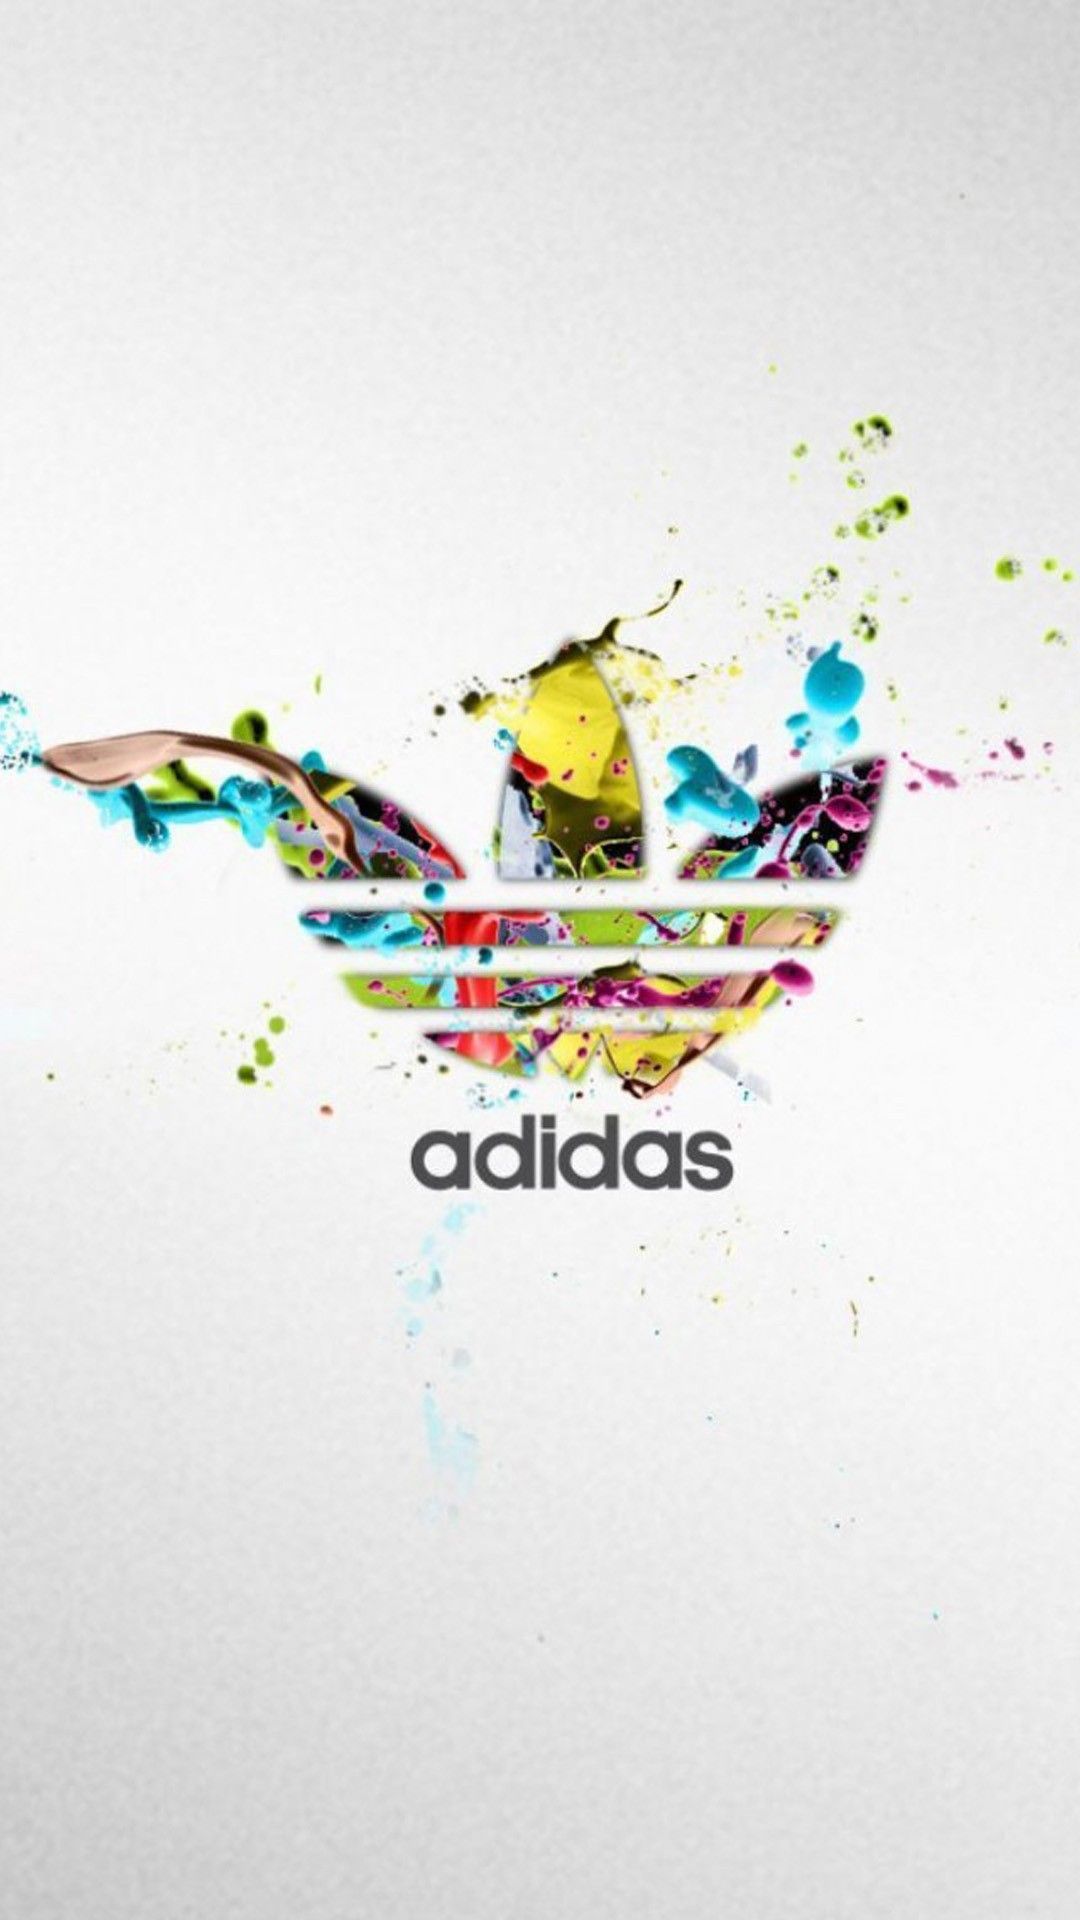 Adidas Wallpaper Brands Other HD